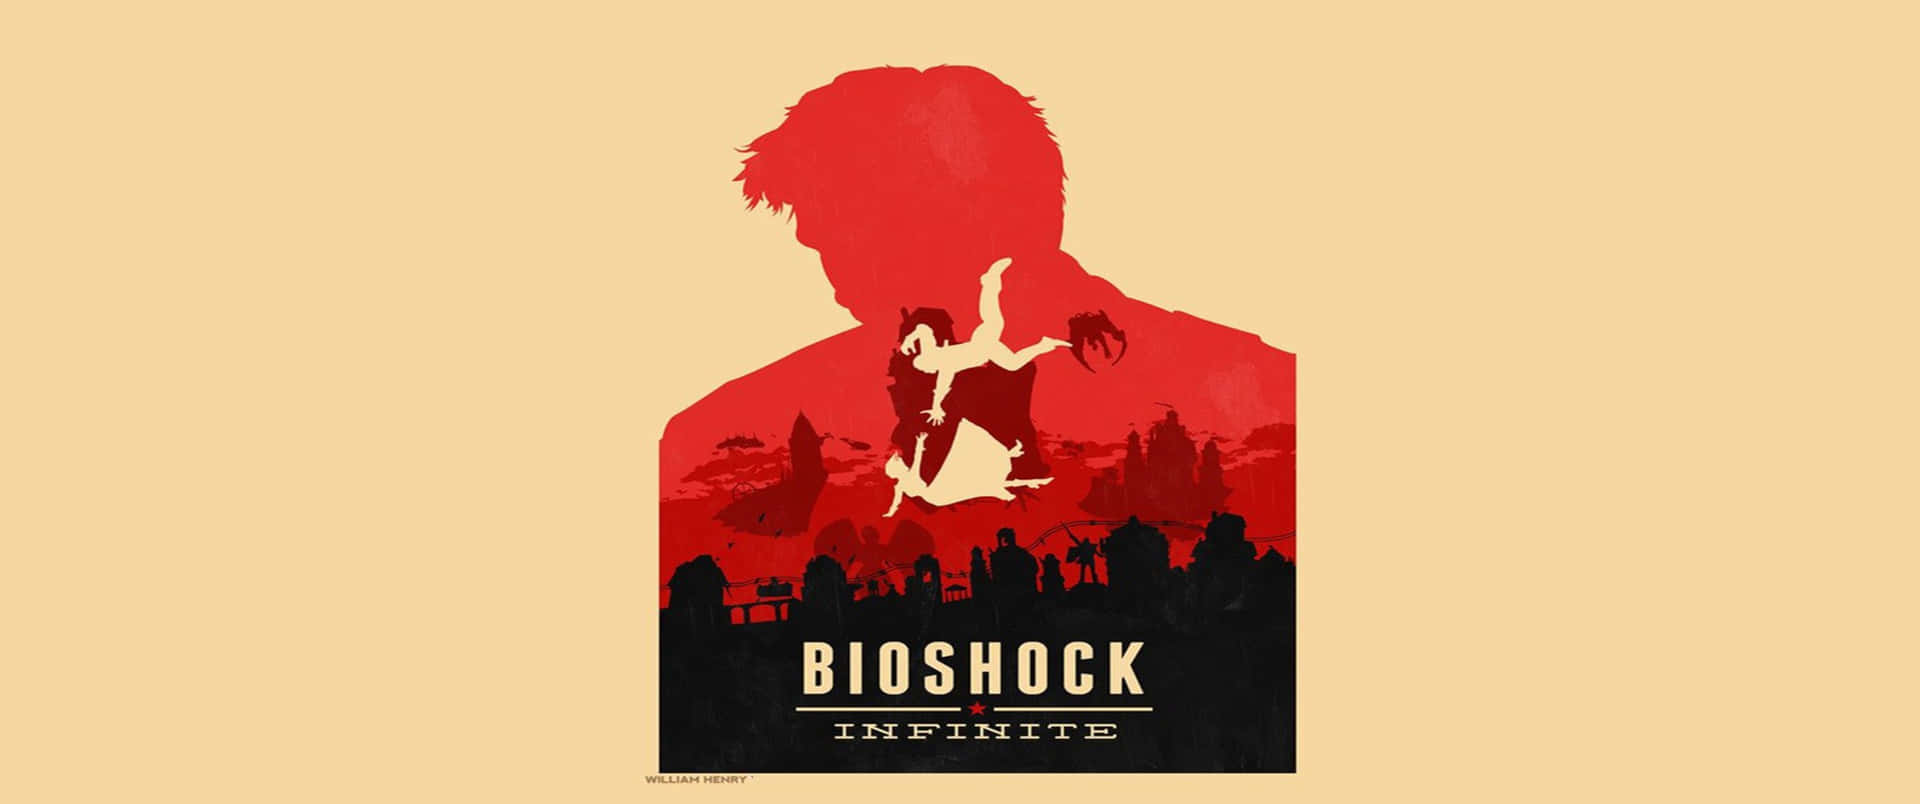 Silhuettav Booker 3440x1440p Bioshock Infinite Bakgrund.